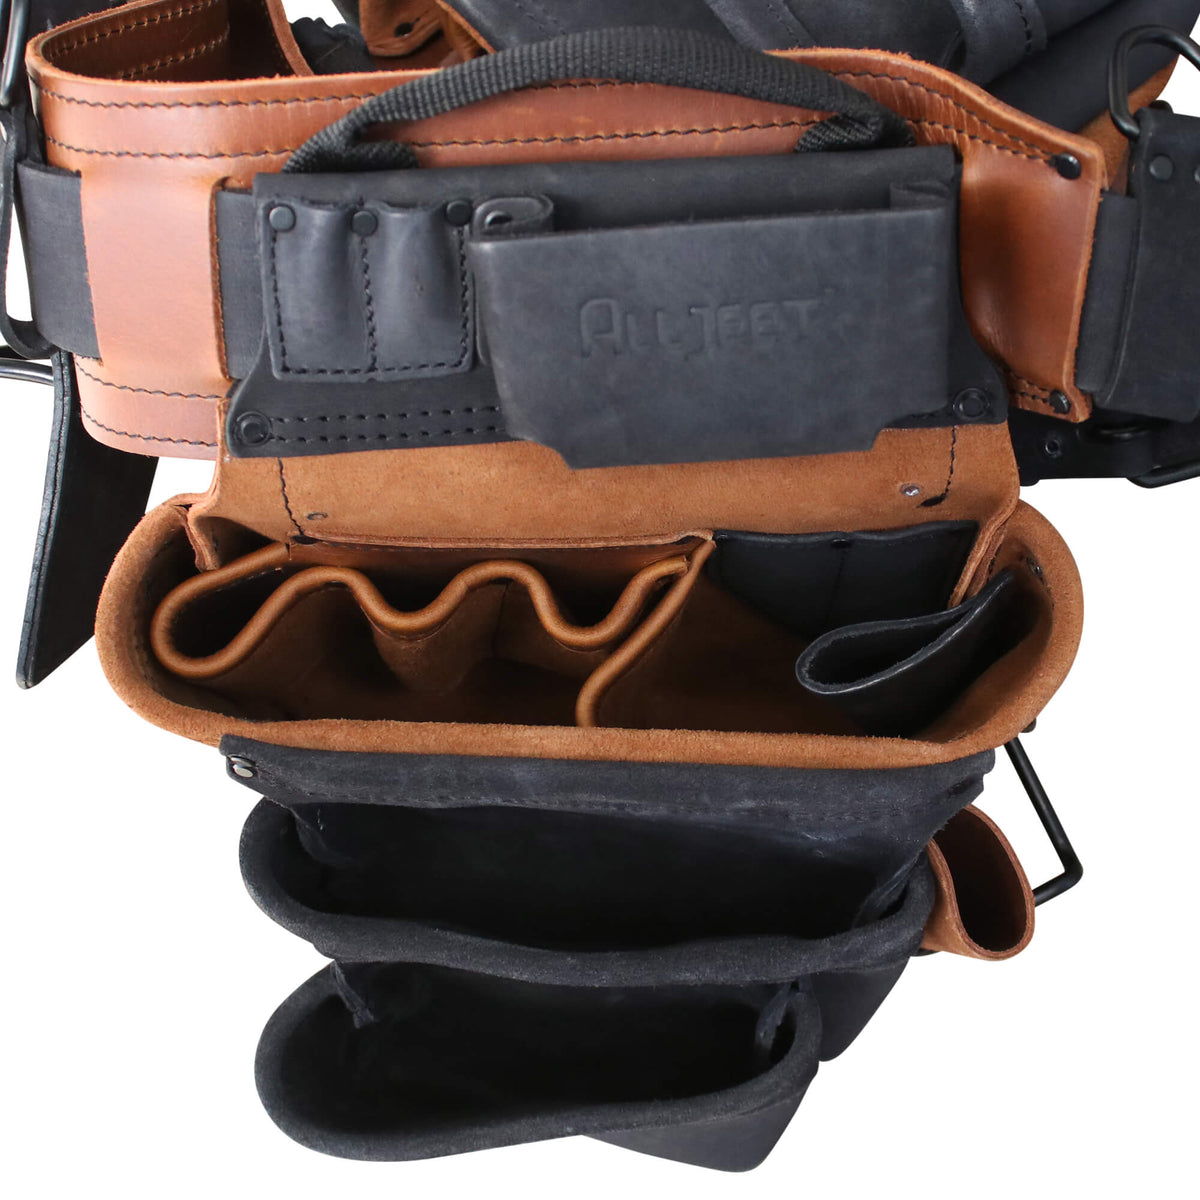 leather toolbelt with many pockets